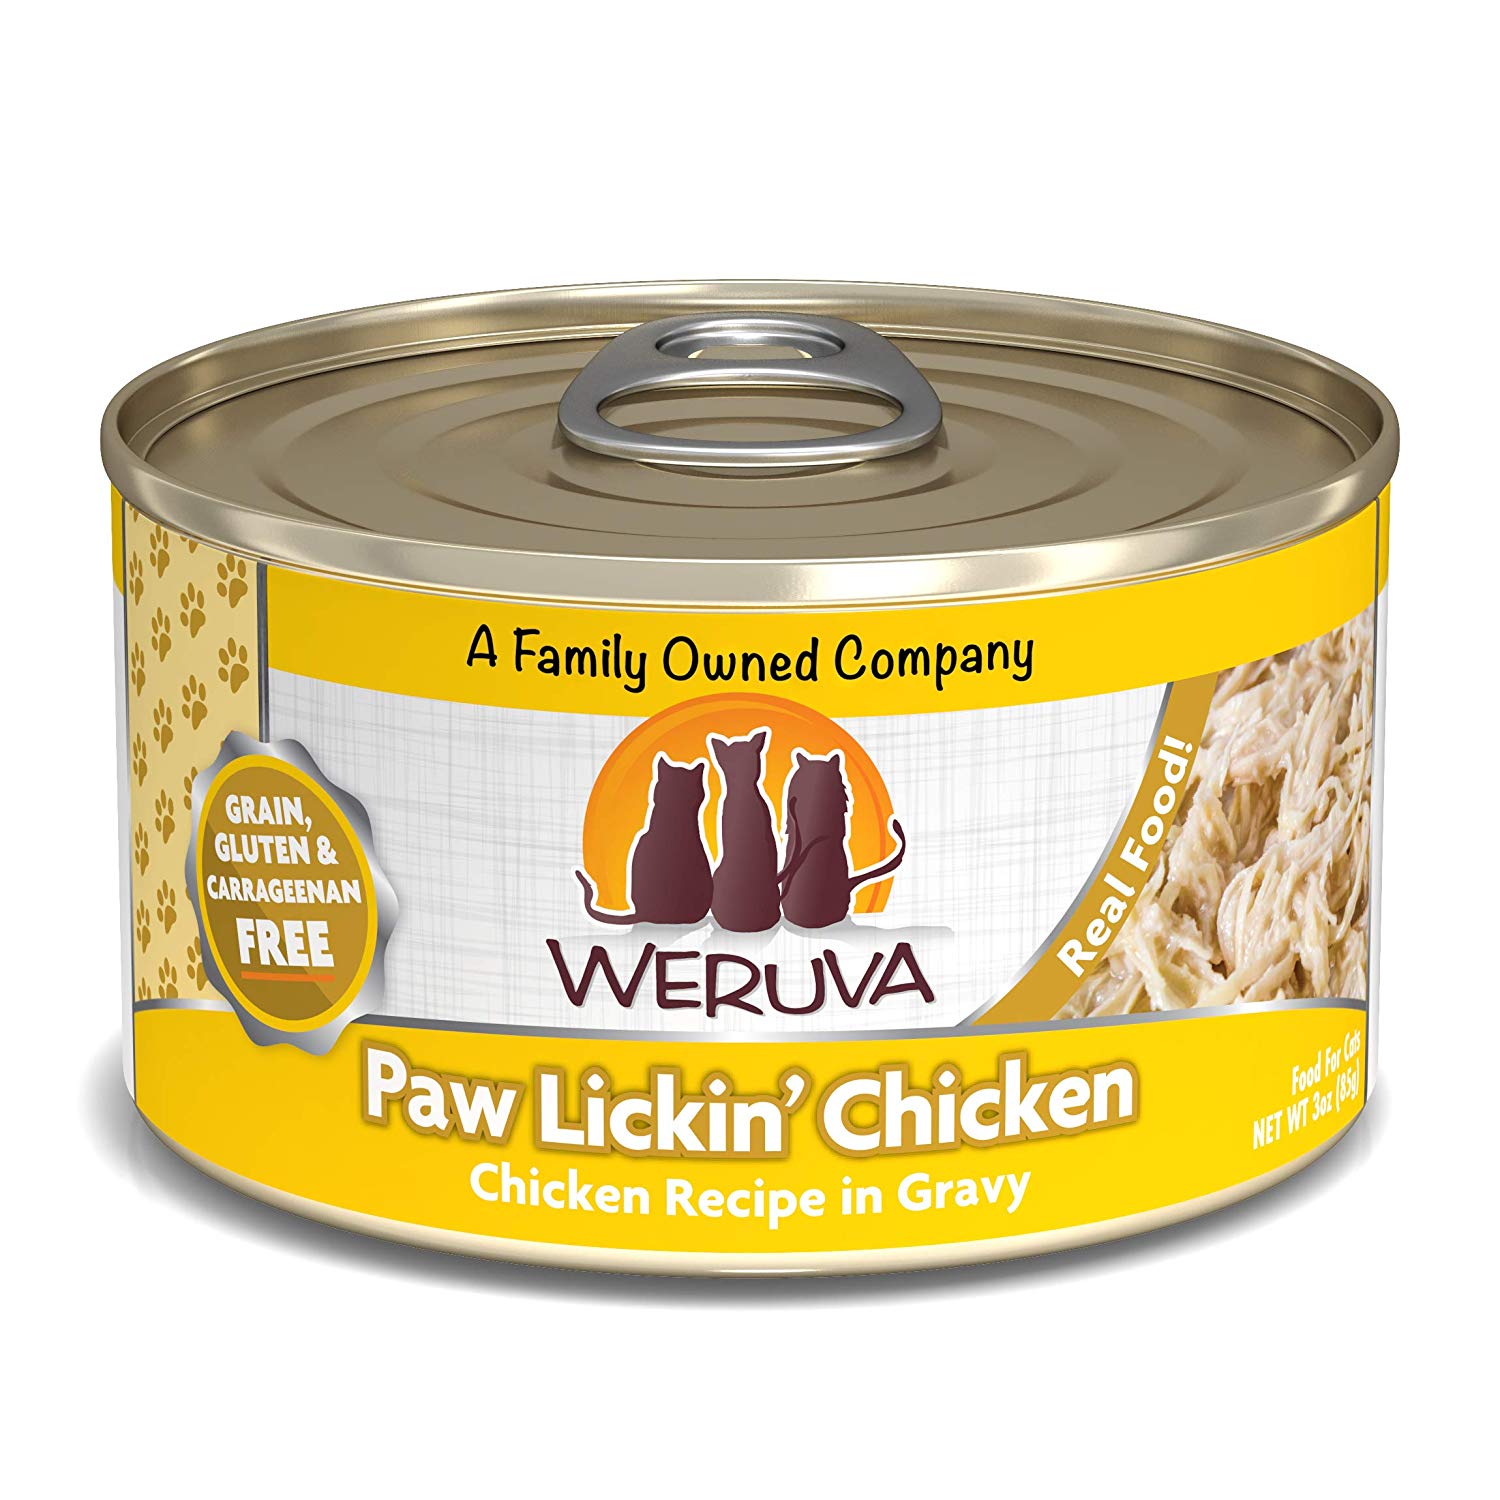 唯美味主食貓罐-吮掌回味雞胸肉
WERUVA-Paw Licking Chicken With Chicken in Gravy